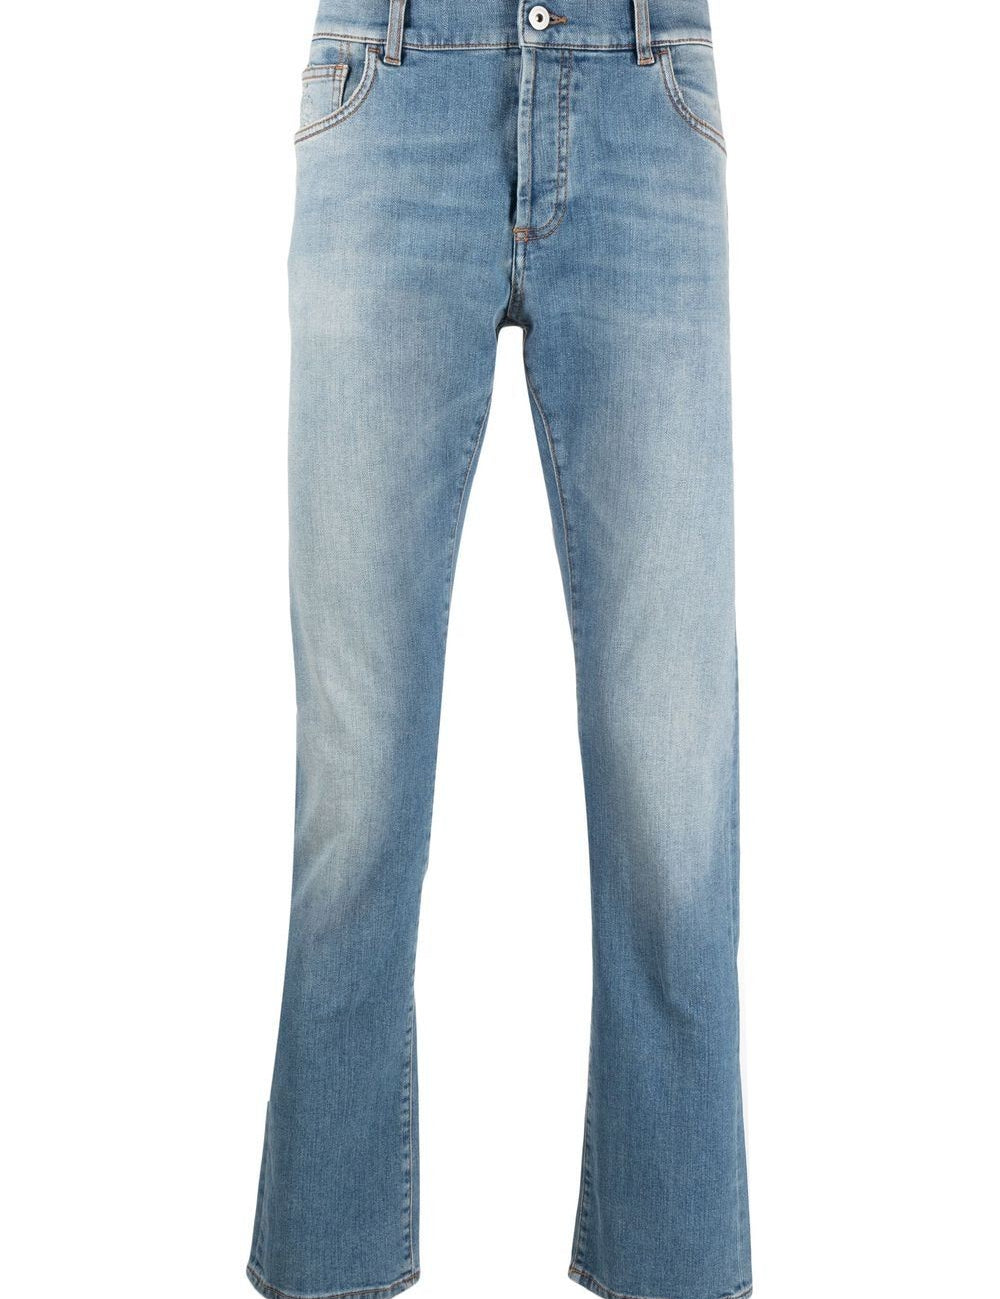 tempera-denim-jeans.jpg